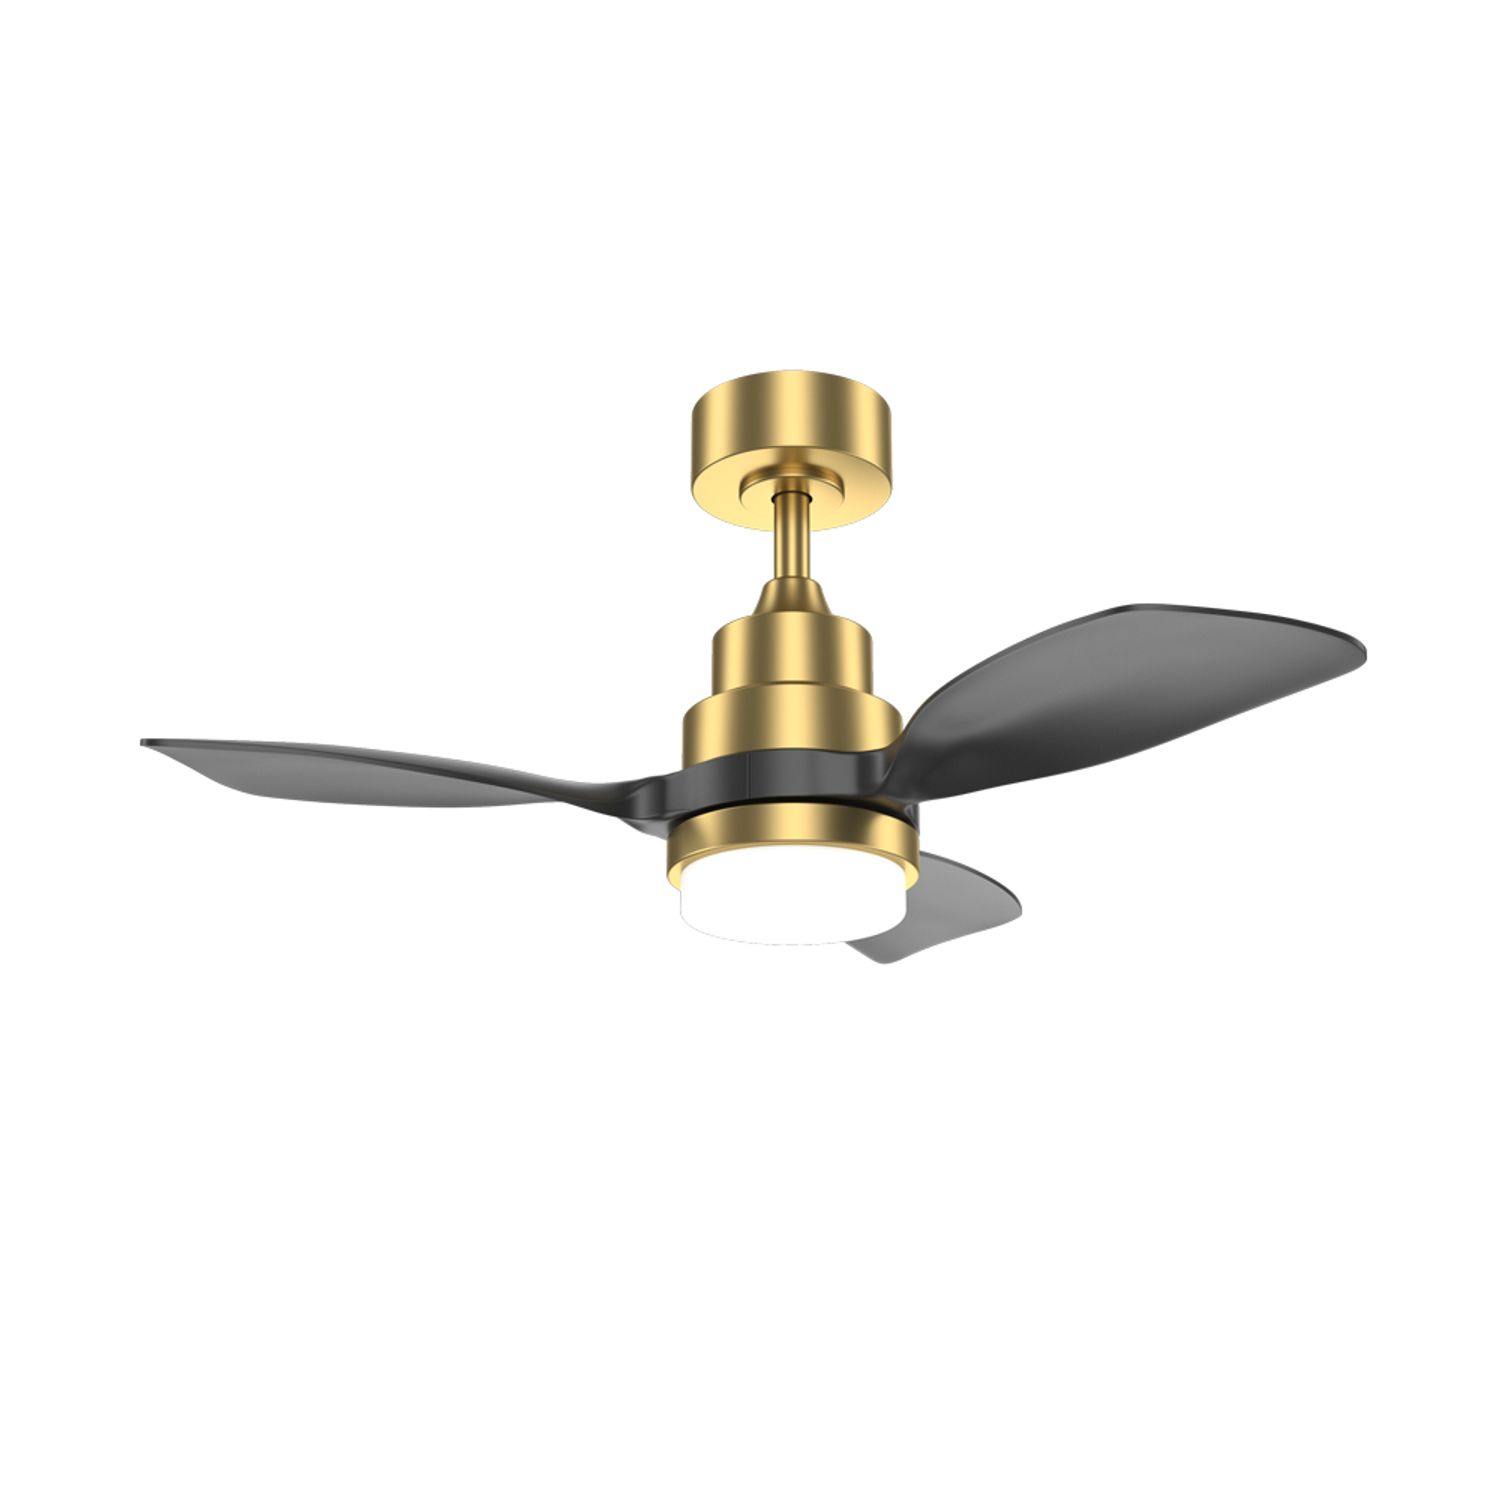 36" Designer Wooden Ceiling Fan 6-Speed Remote Control Gold and black KBS-36K002